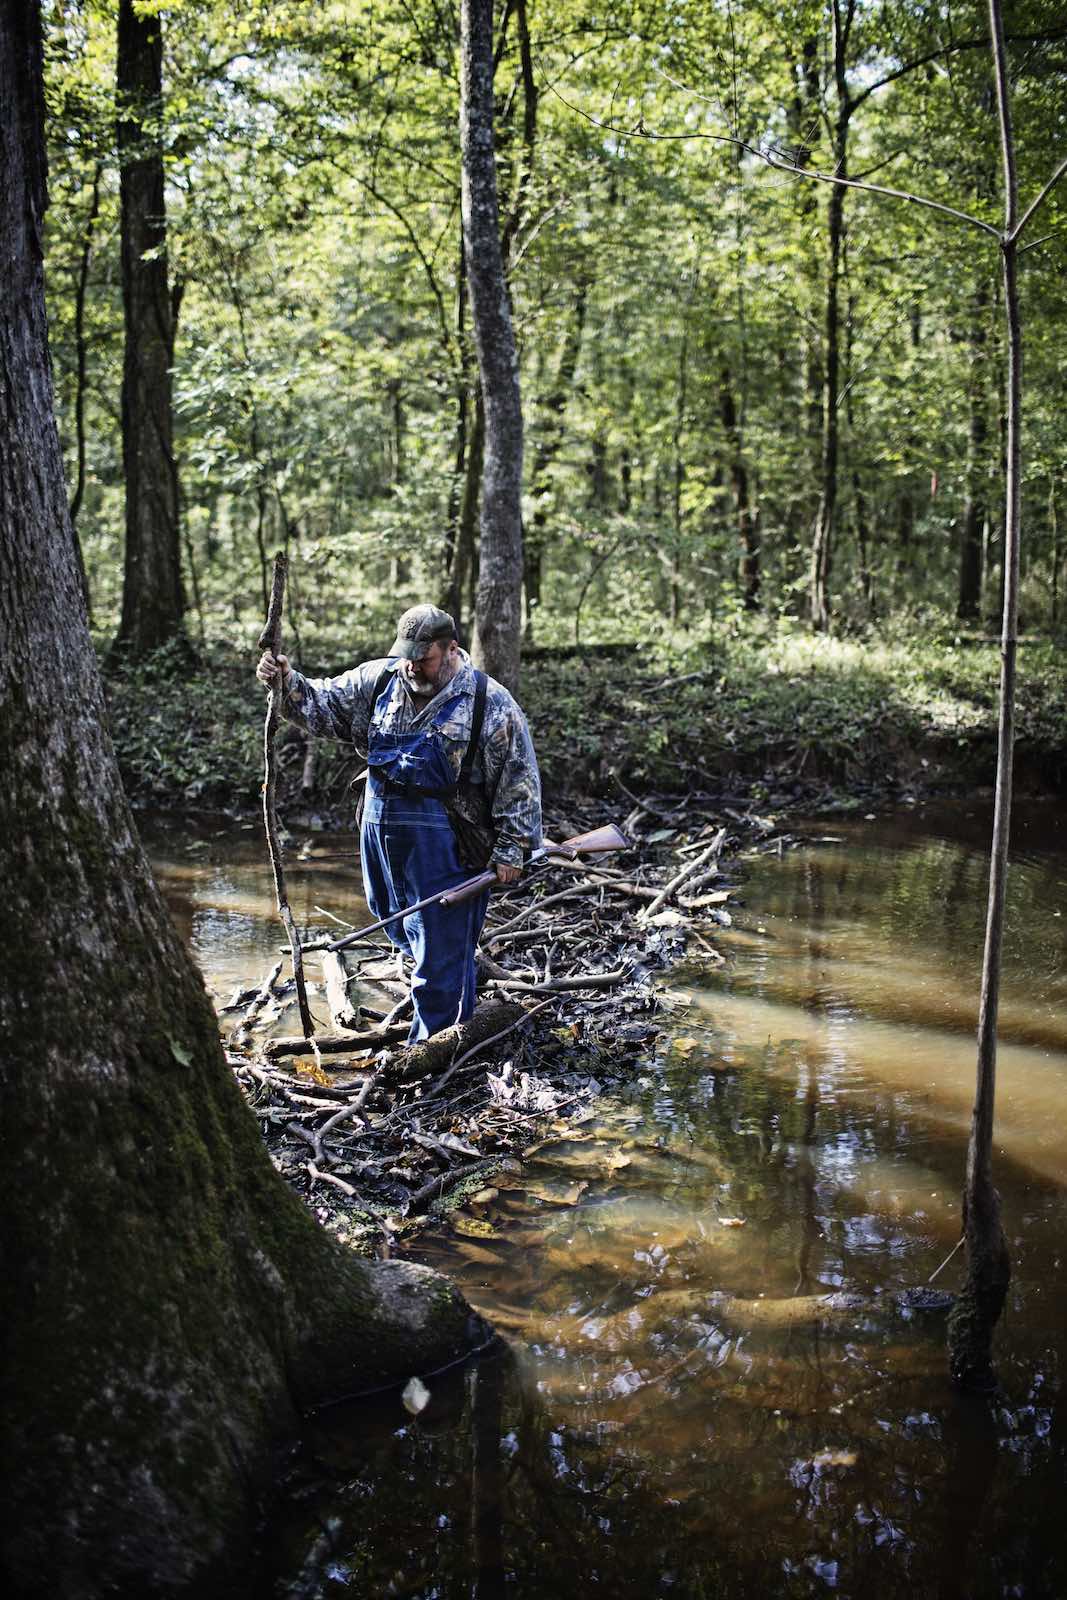 Jody Horton Photography - Hunter carrying a shot gun while crossing a stick bridge across the water. 